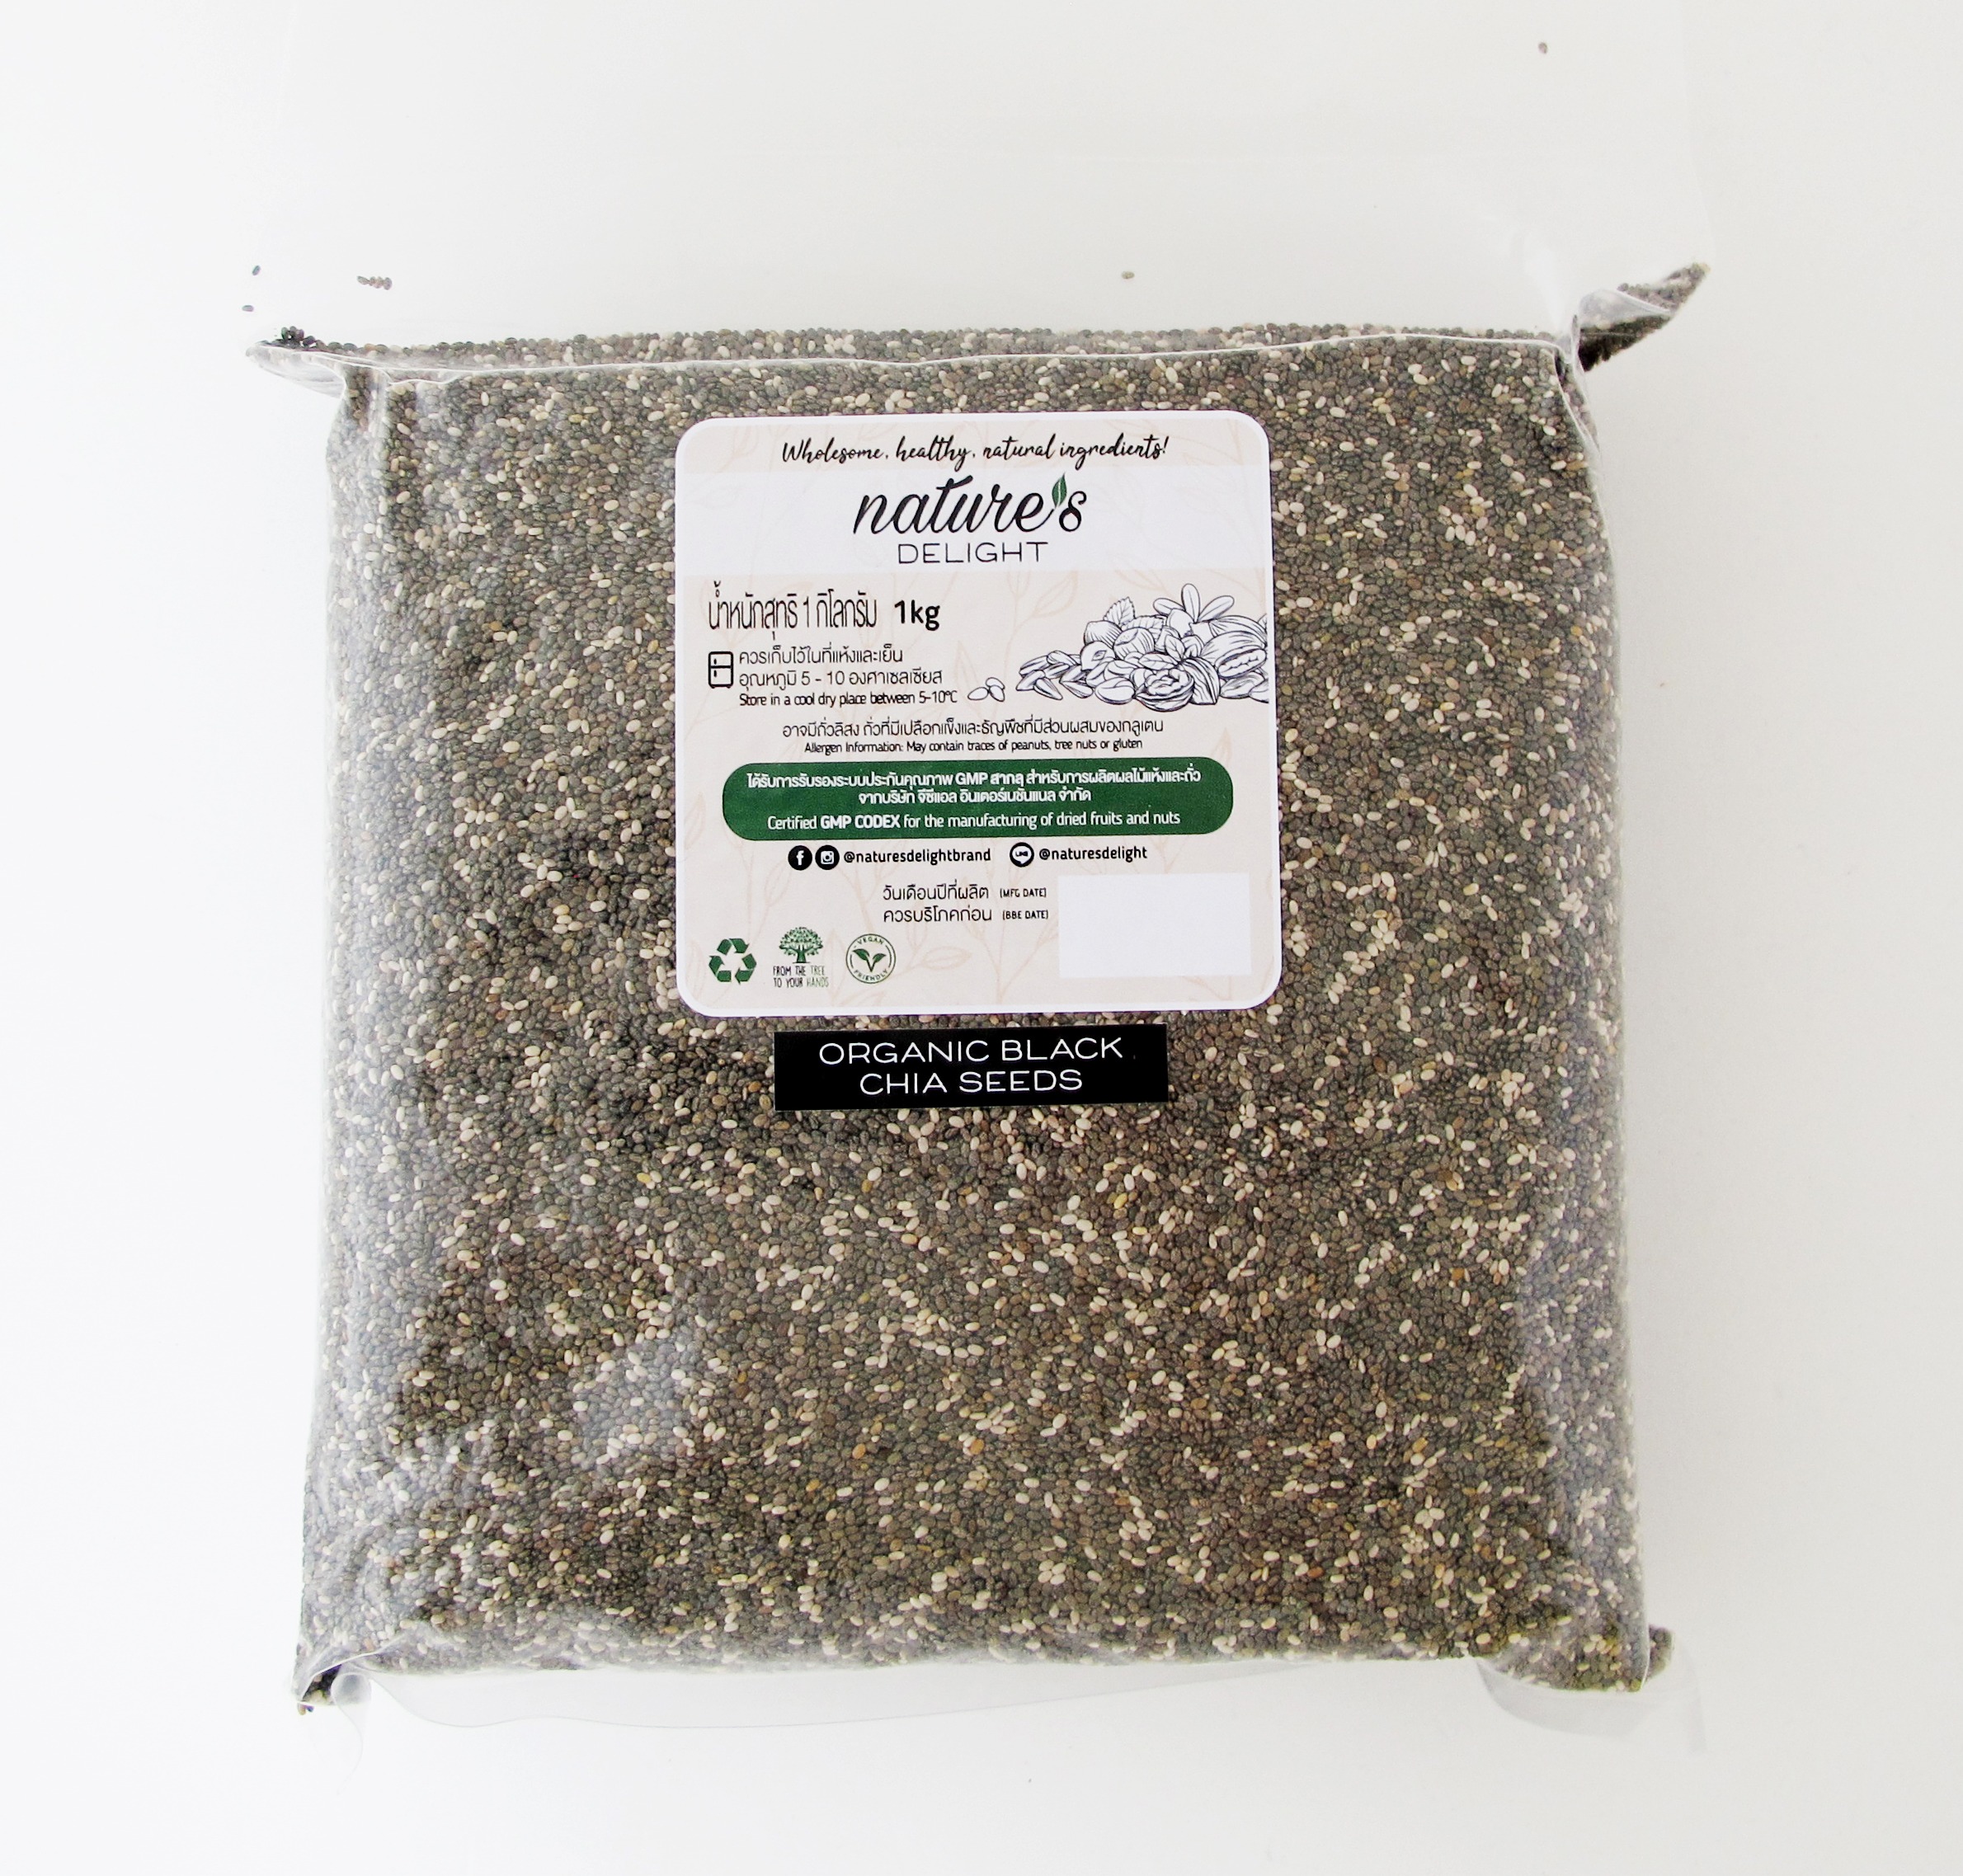 Nature's Delight Organic Black Chia Seeds 1kg Bulk Pack/ ออร์แกนิคเชียสีดำ 1กก ตราเนเจอร์ส ดีไลท์